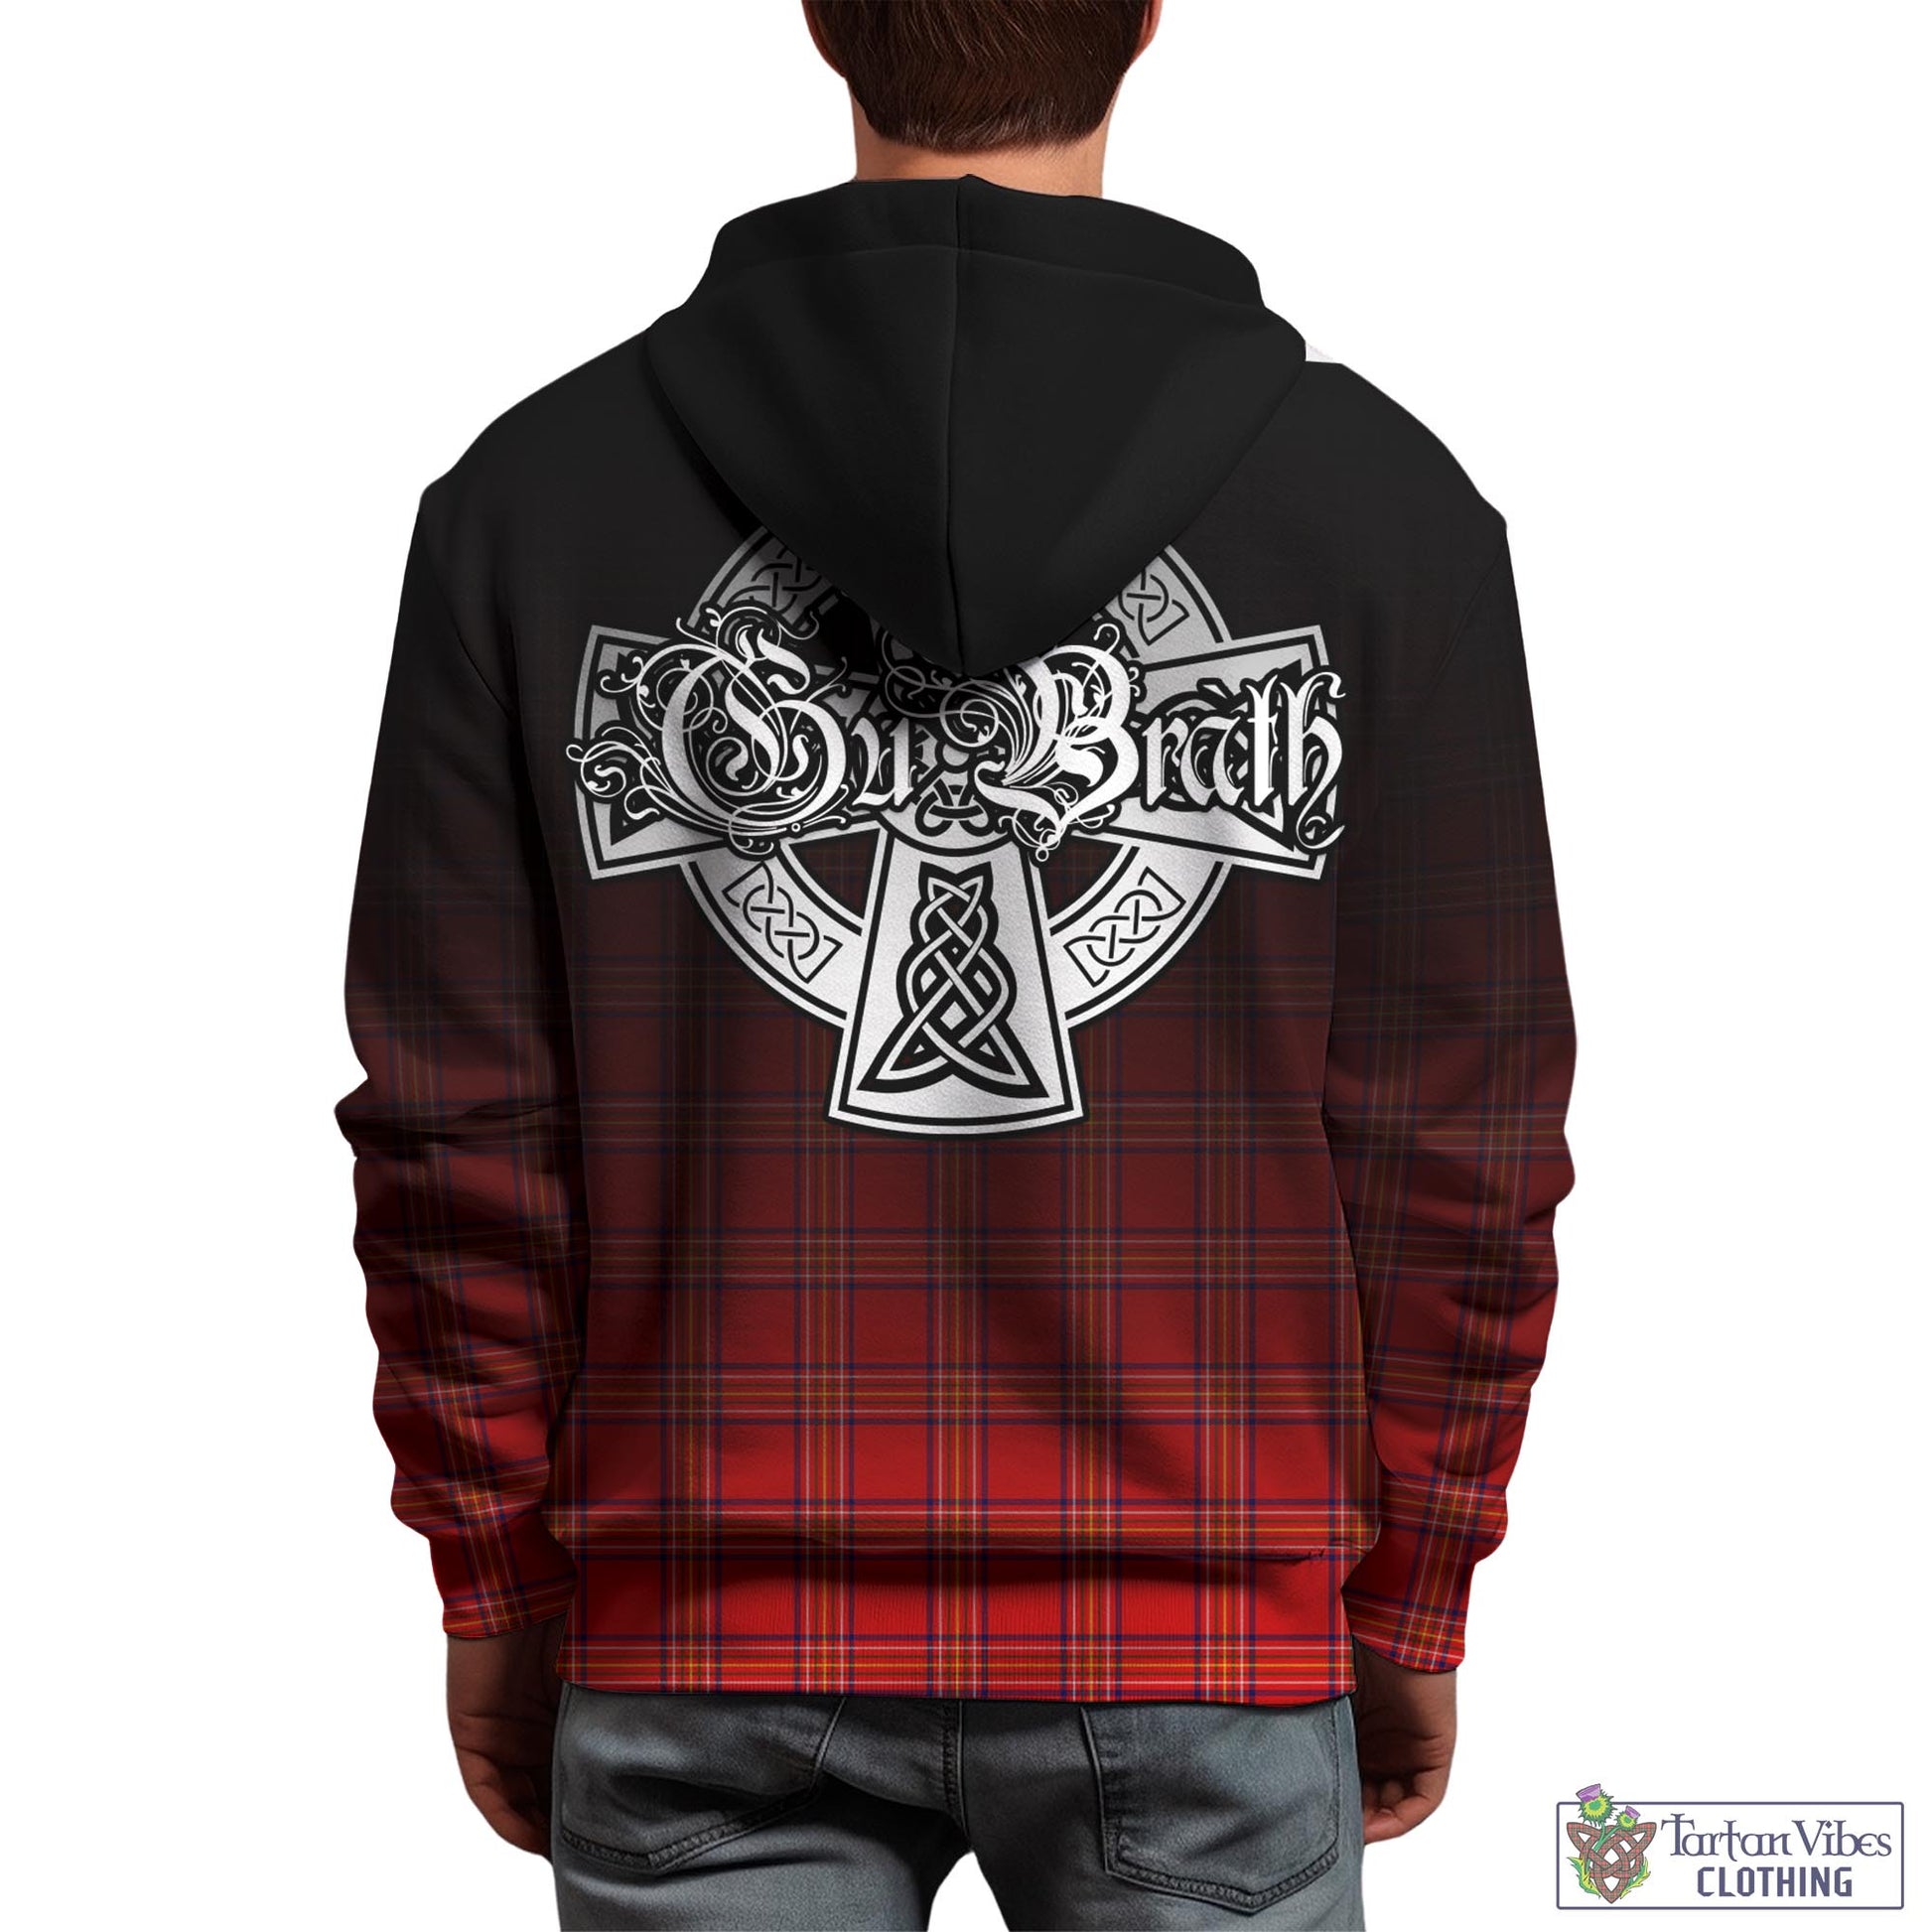 Tartan Vibes Clothing Burnett Modern Tartan Hoodie Featuring Alba Gu Brath Family Crest Celtic Inspired